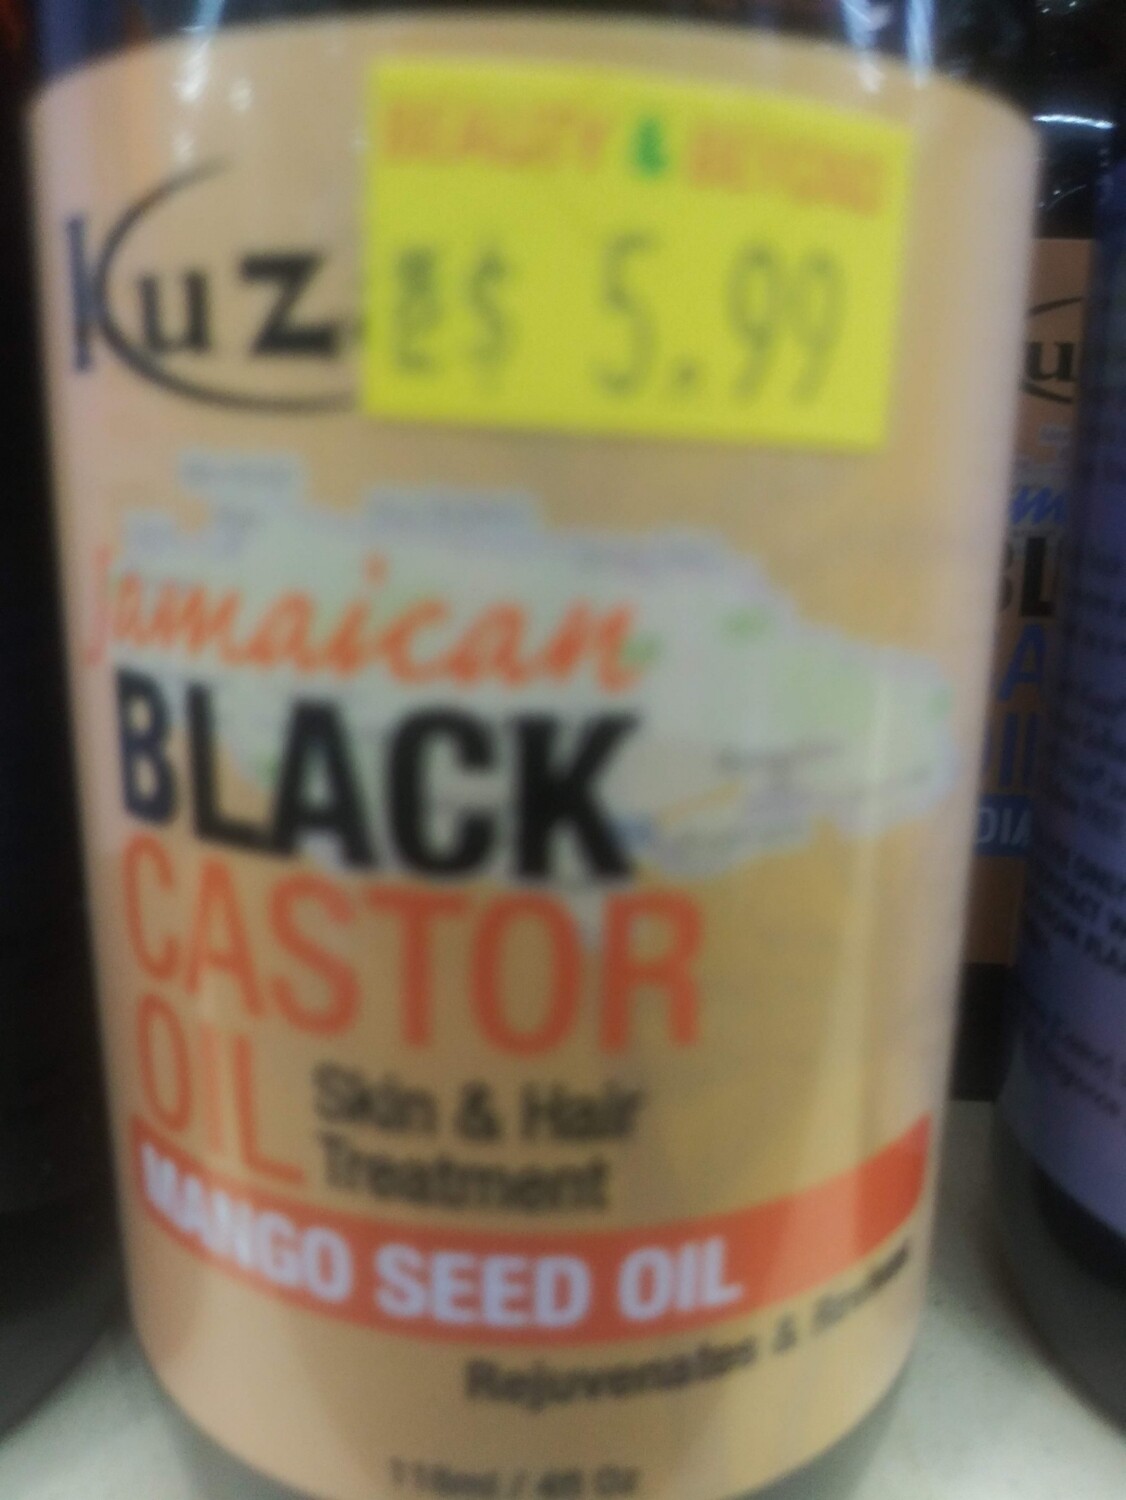 Kuz Jamaican Black Castor Oil (Mango Seed Oil)